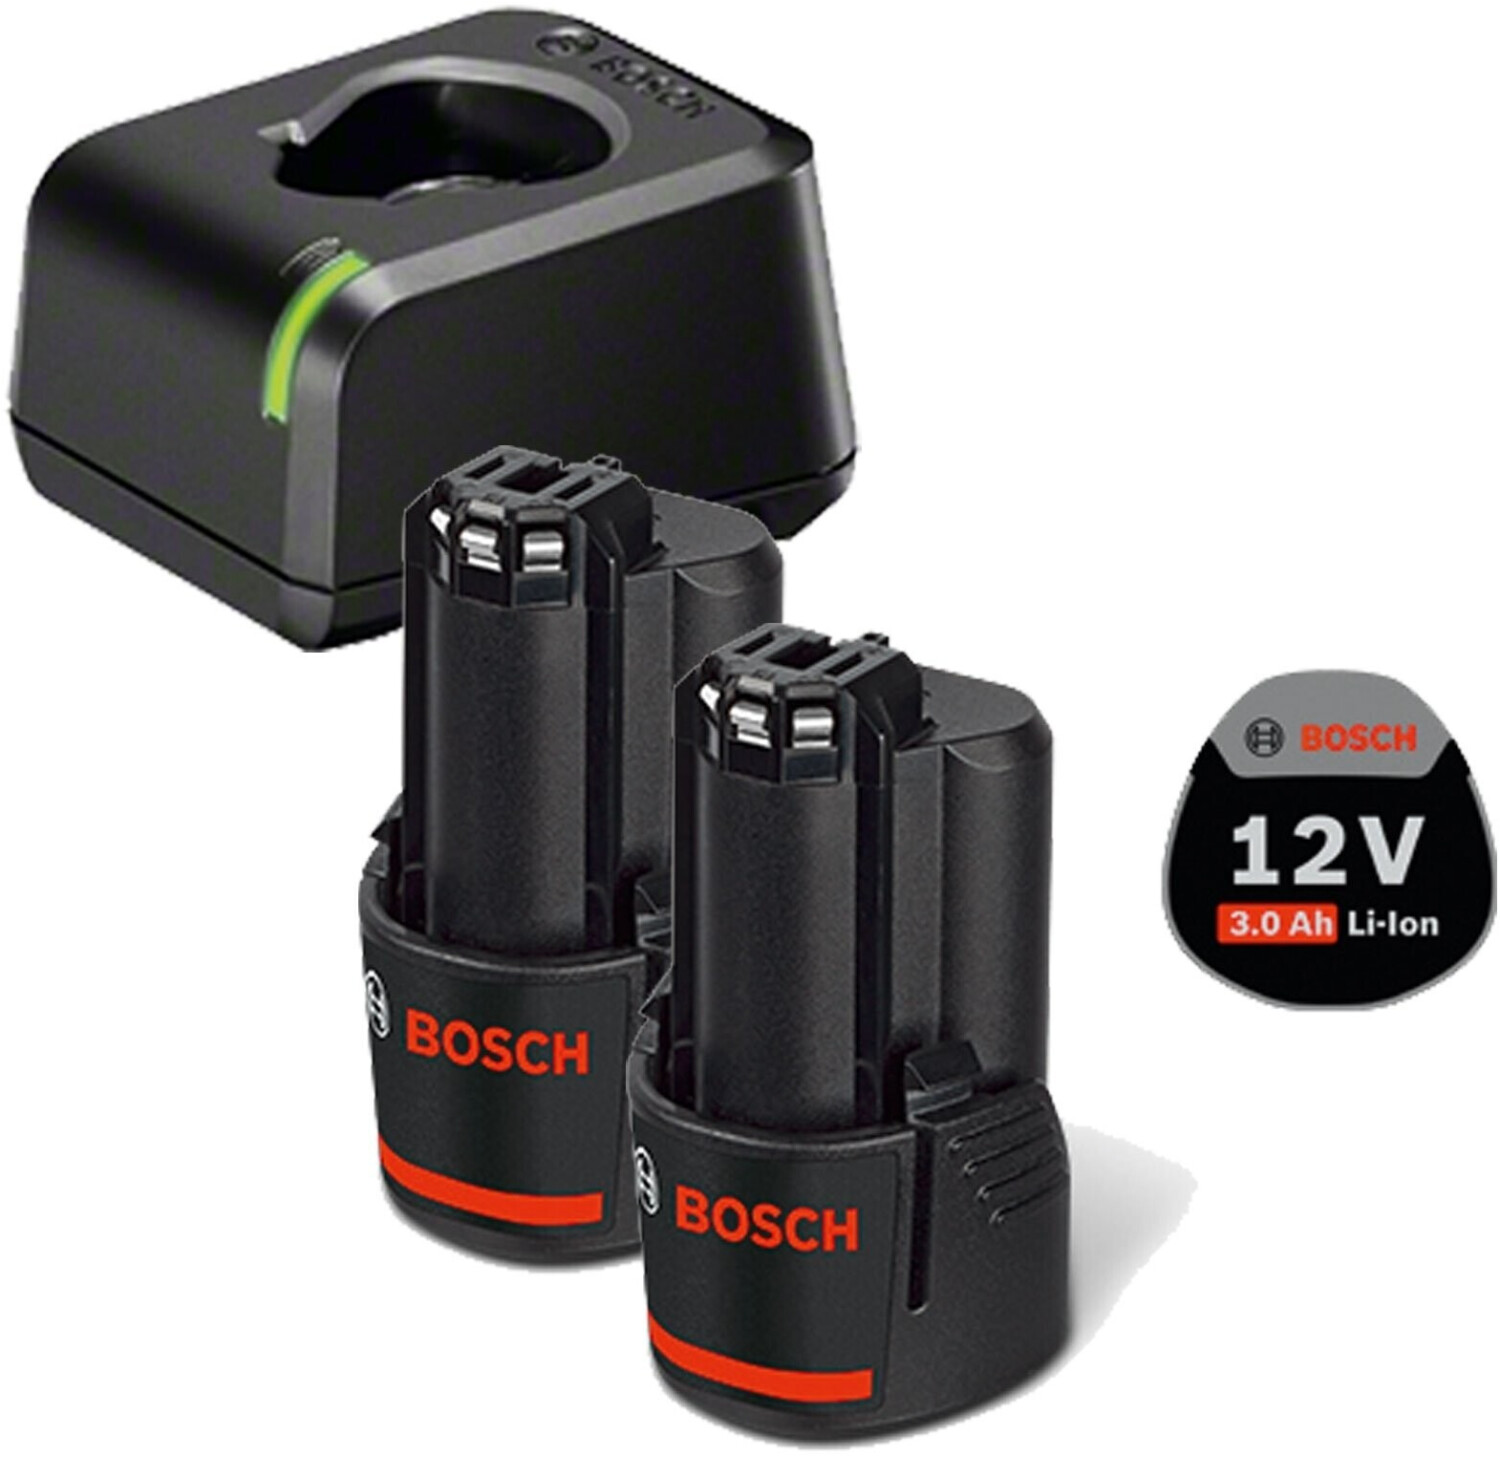 Bosch GAL 12V-20 12 + Ah Preisvergleich 3,0 GBA € | 120,99 (2607226187) 2x ab bei